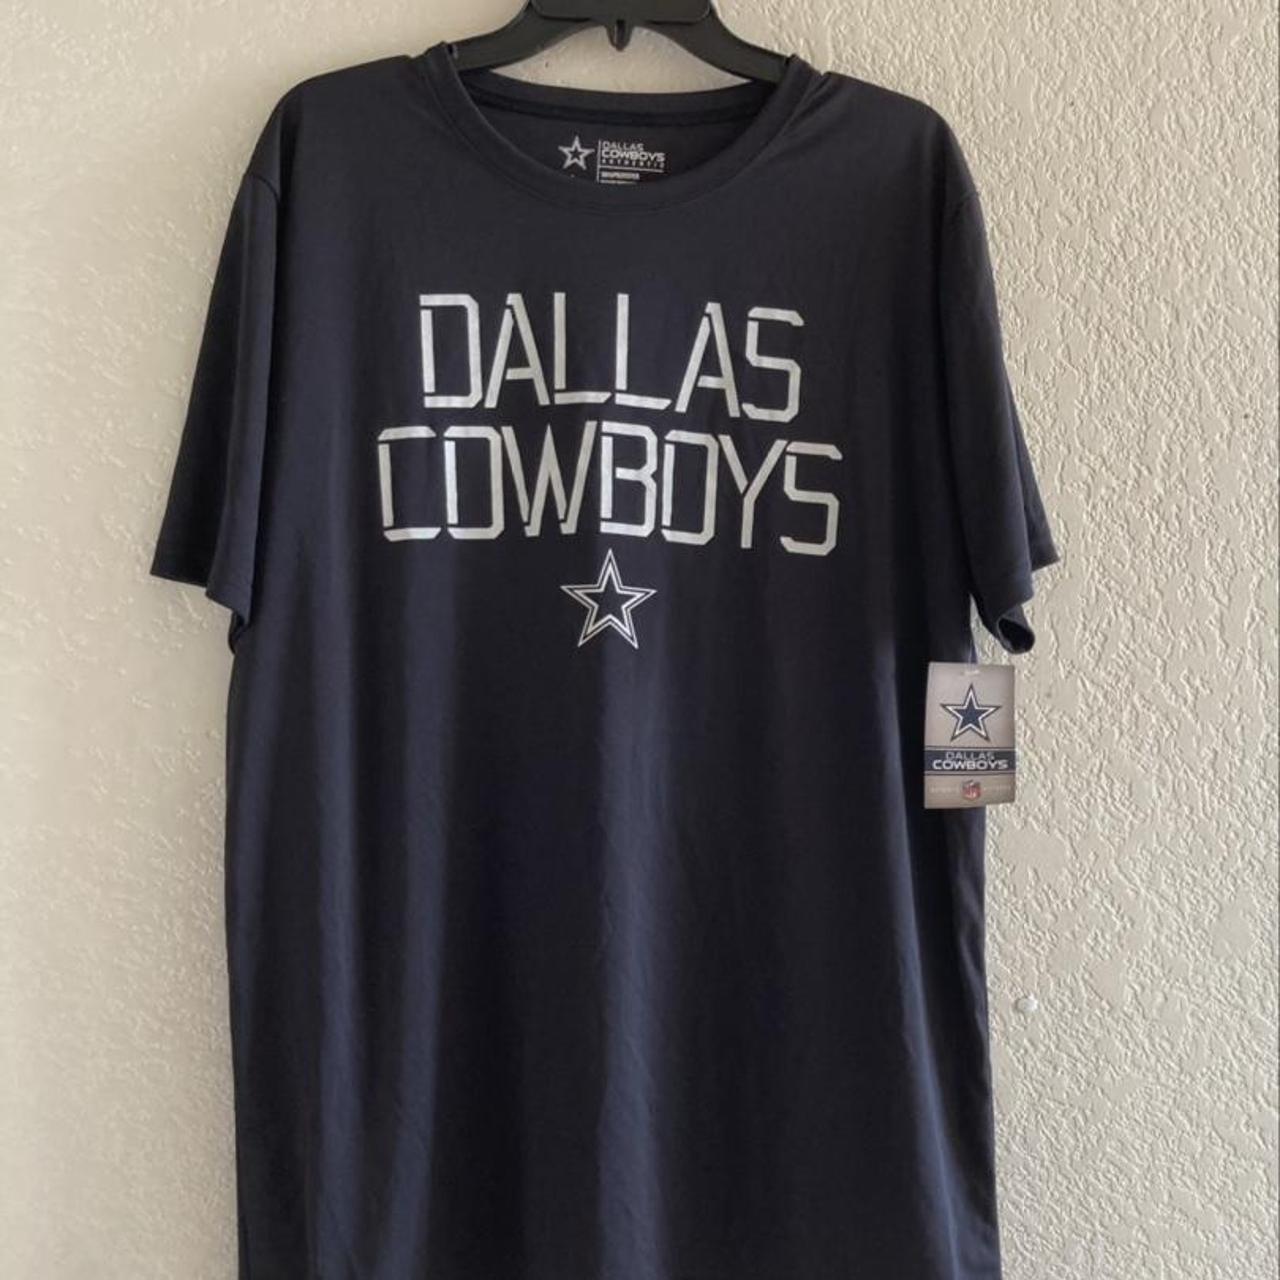 Product Image 1 - Dallas Cowboys Authentic Tee Shirt
Black
Men’s
Size